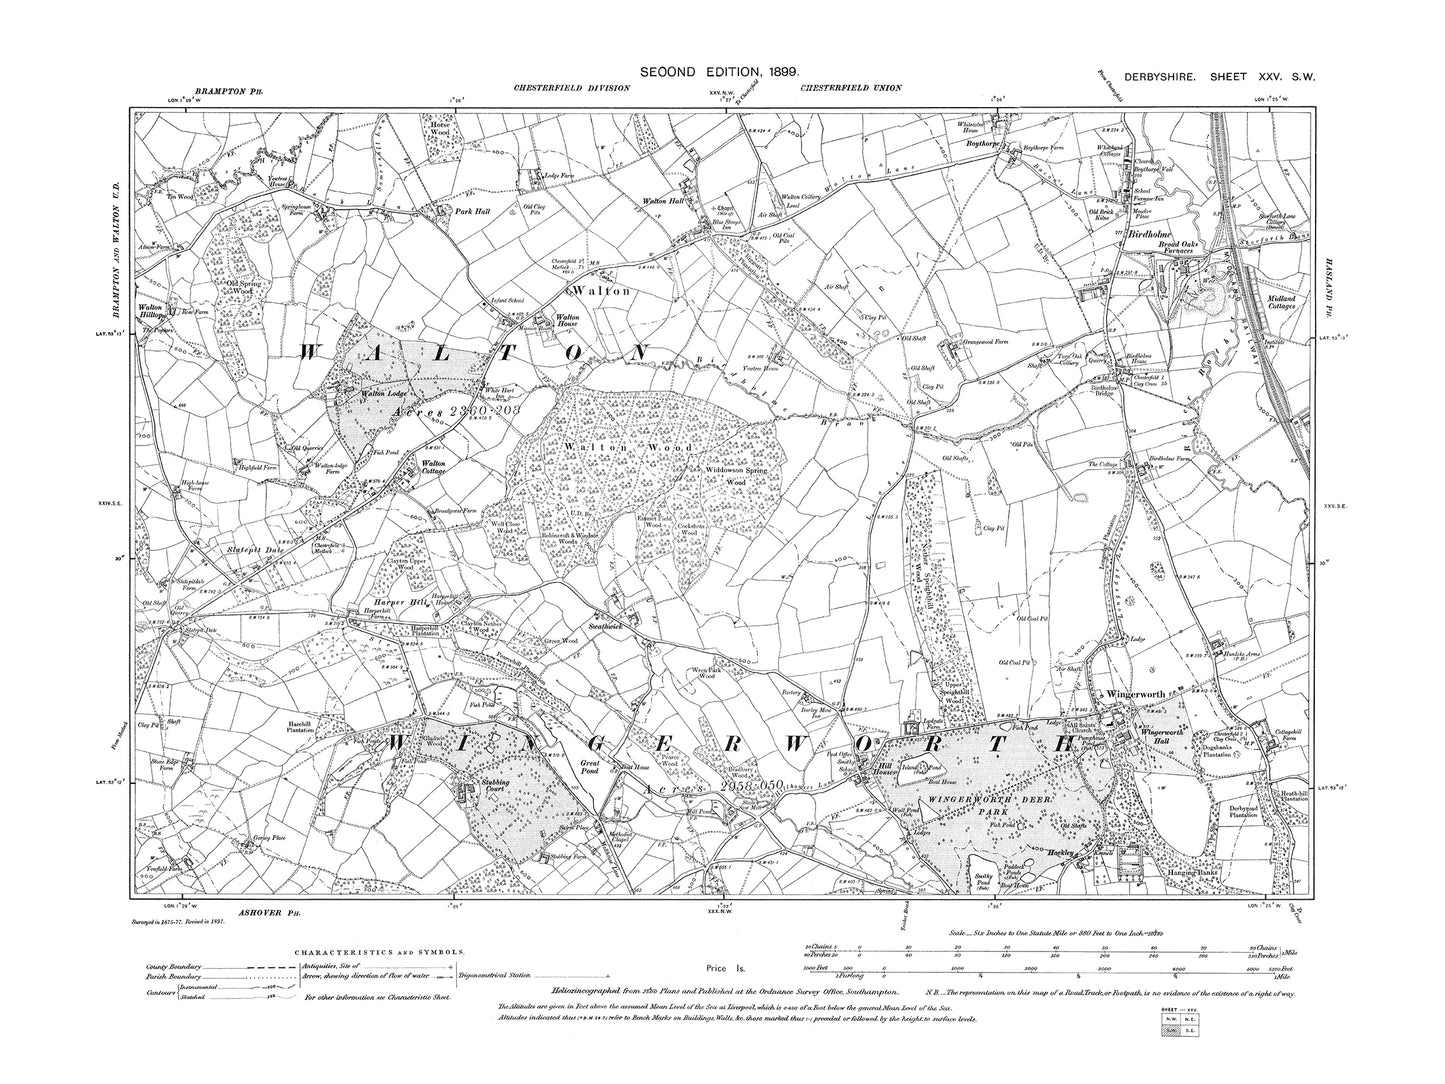 Old OS map dated 1899, showing Wingerworth, Walton, Birdholme in Derbyshire 25SW